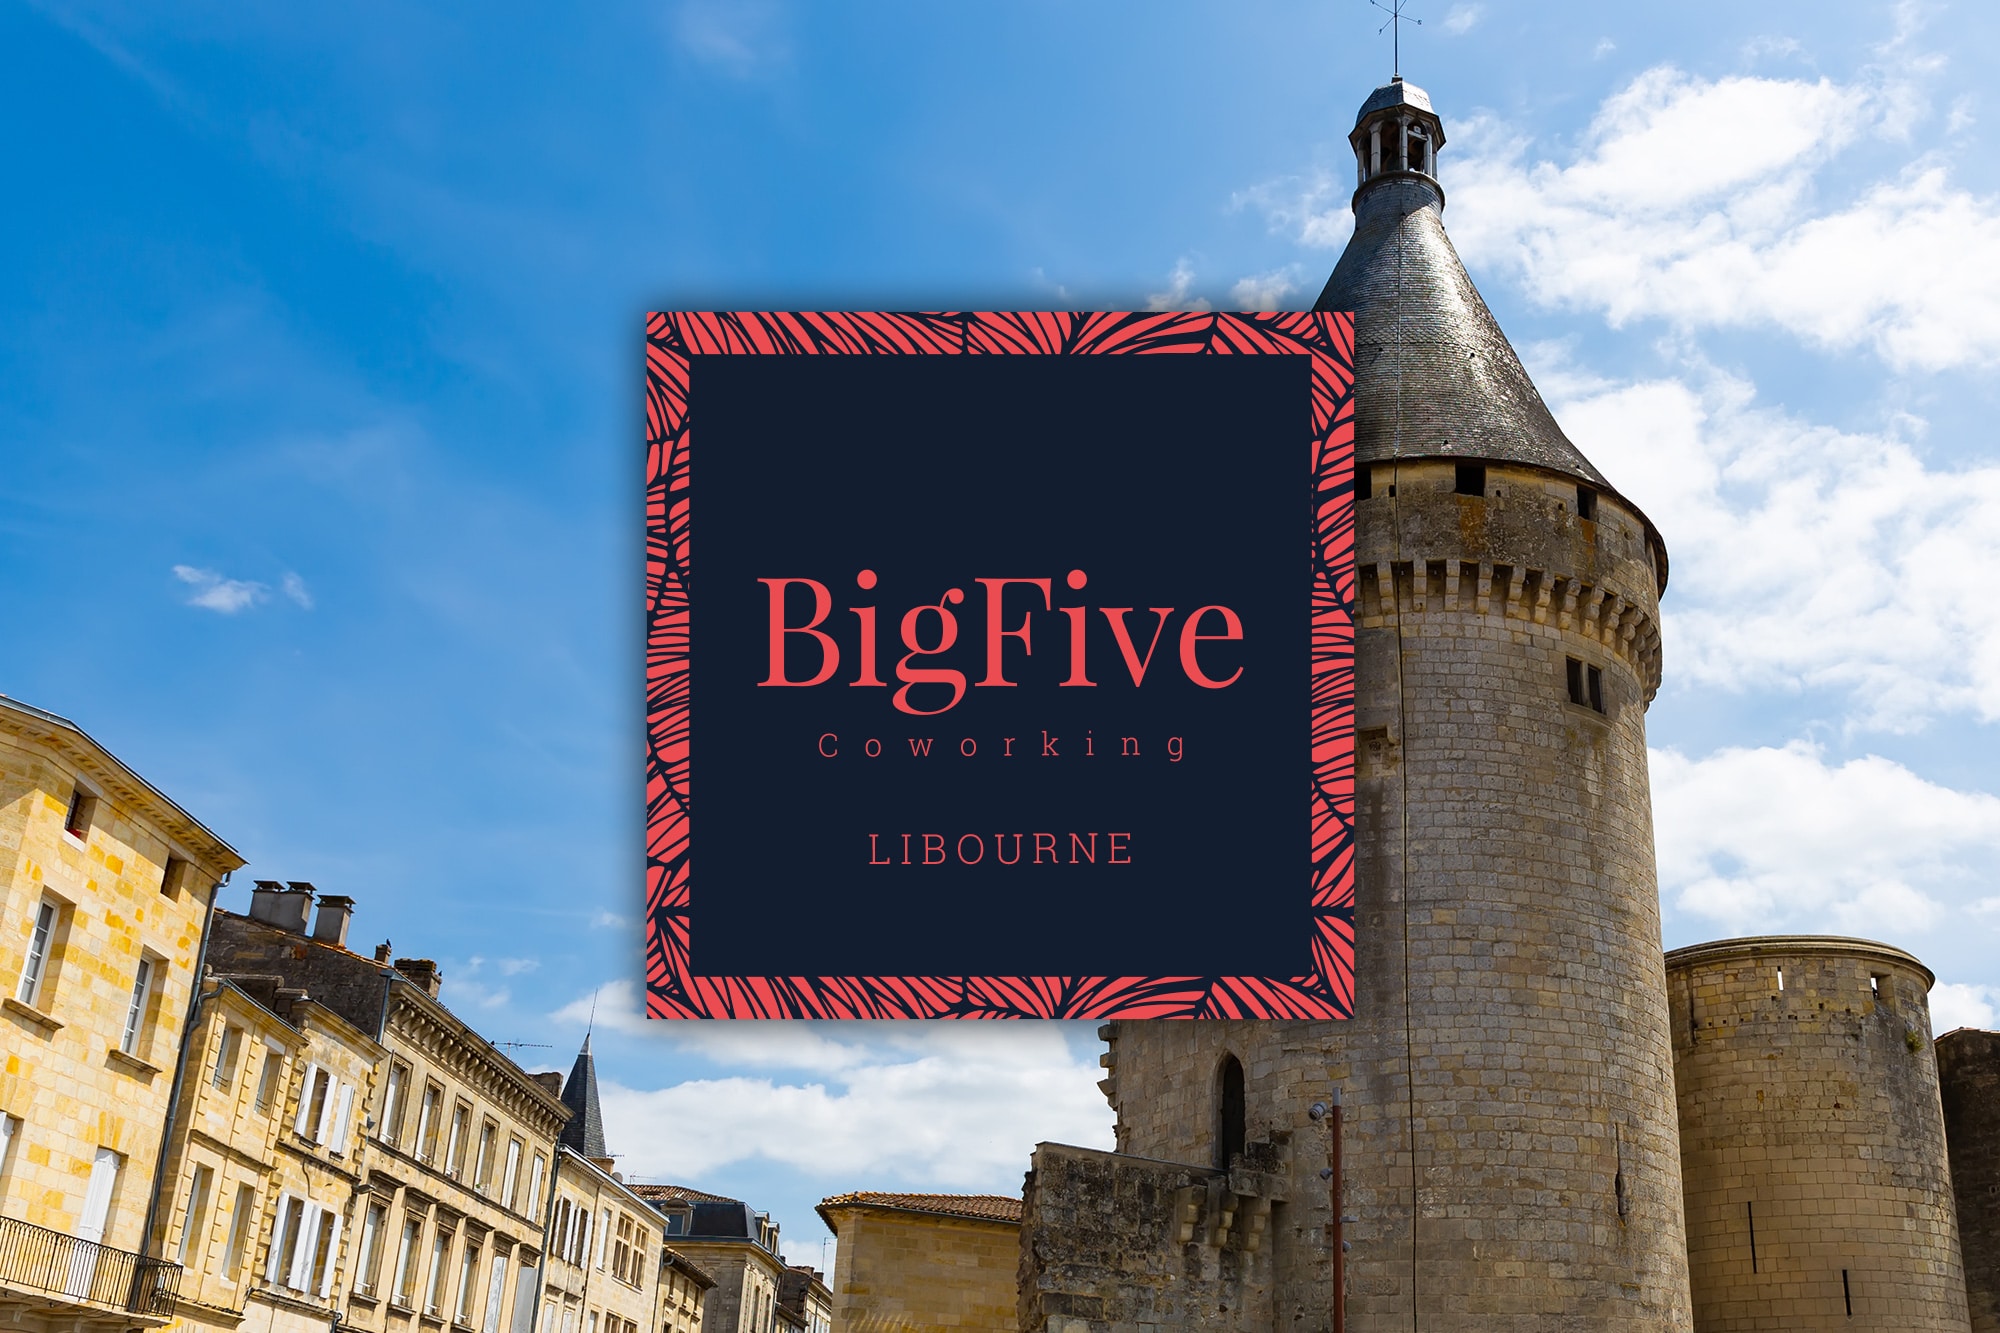 BigFive Coworking Libourne